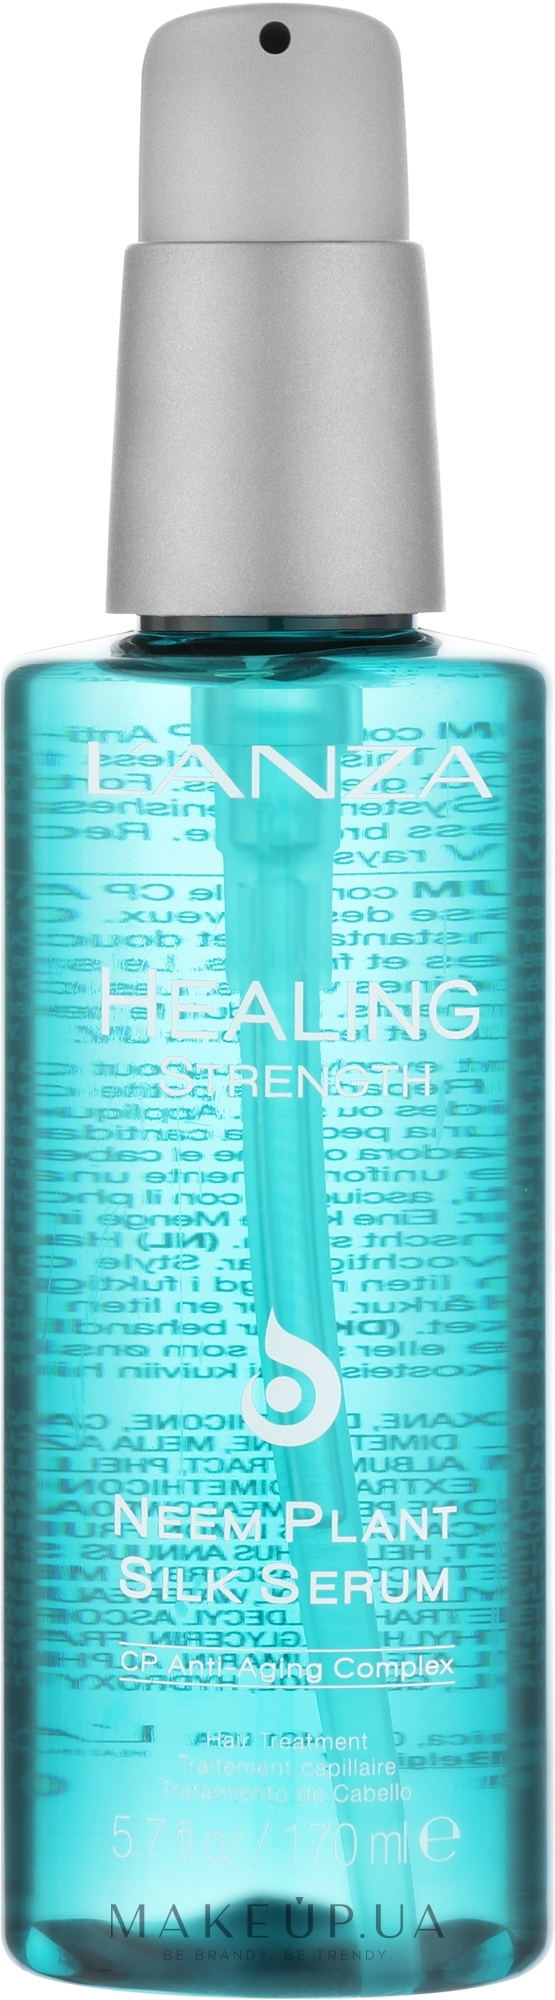 Лечебная сыворотка - L'anza Healing Strength Neem Plant Silk Serum — фото 100ml